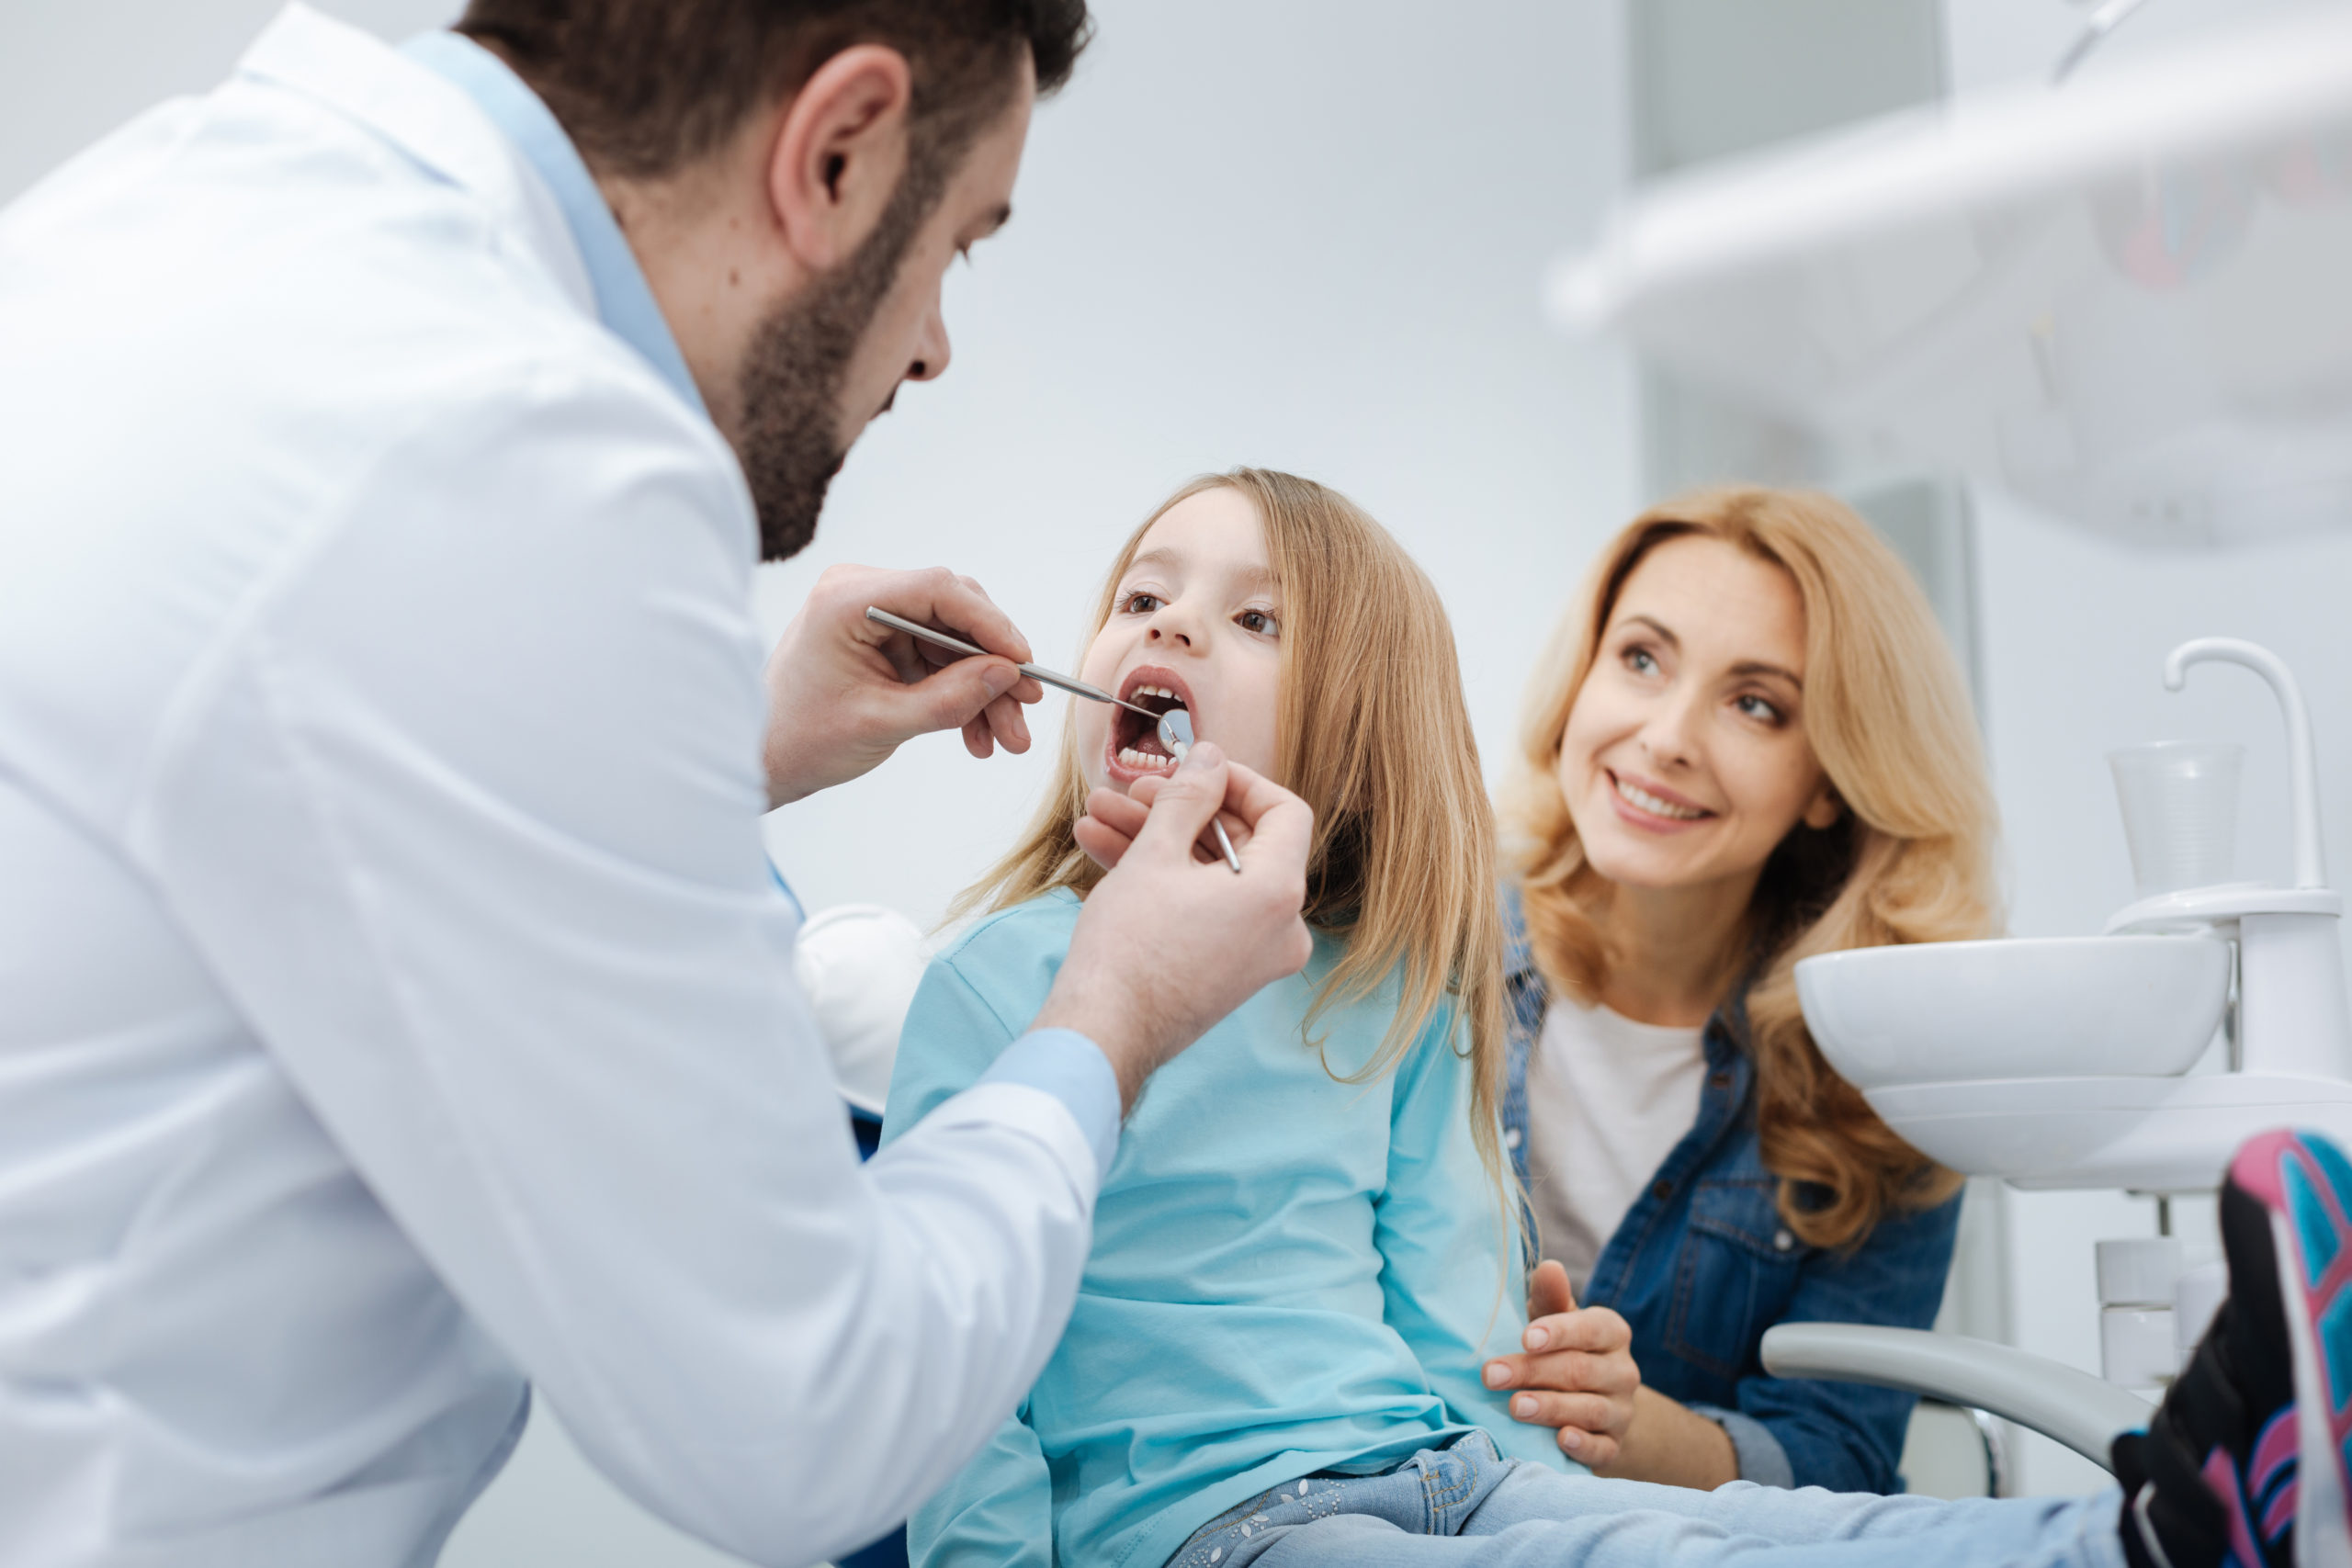 dentist examining a child's teeth